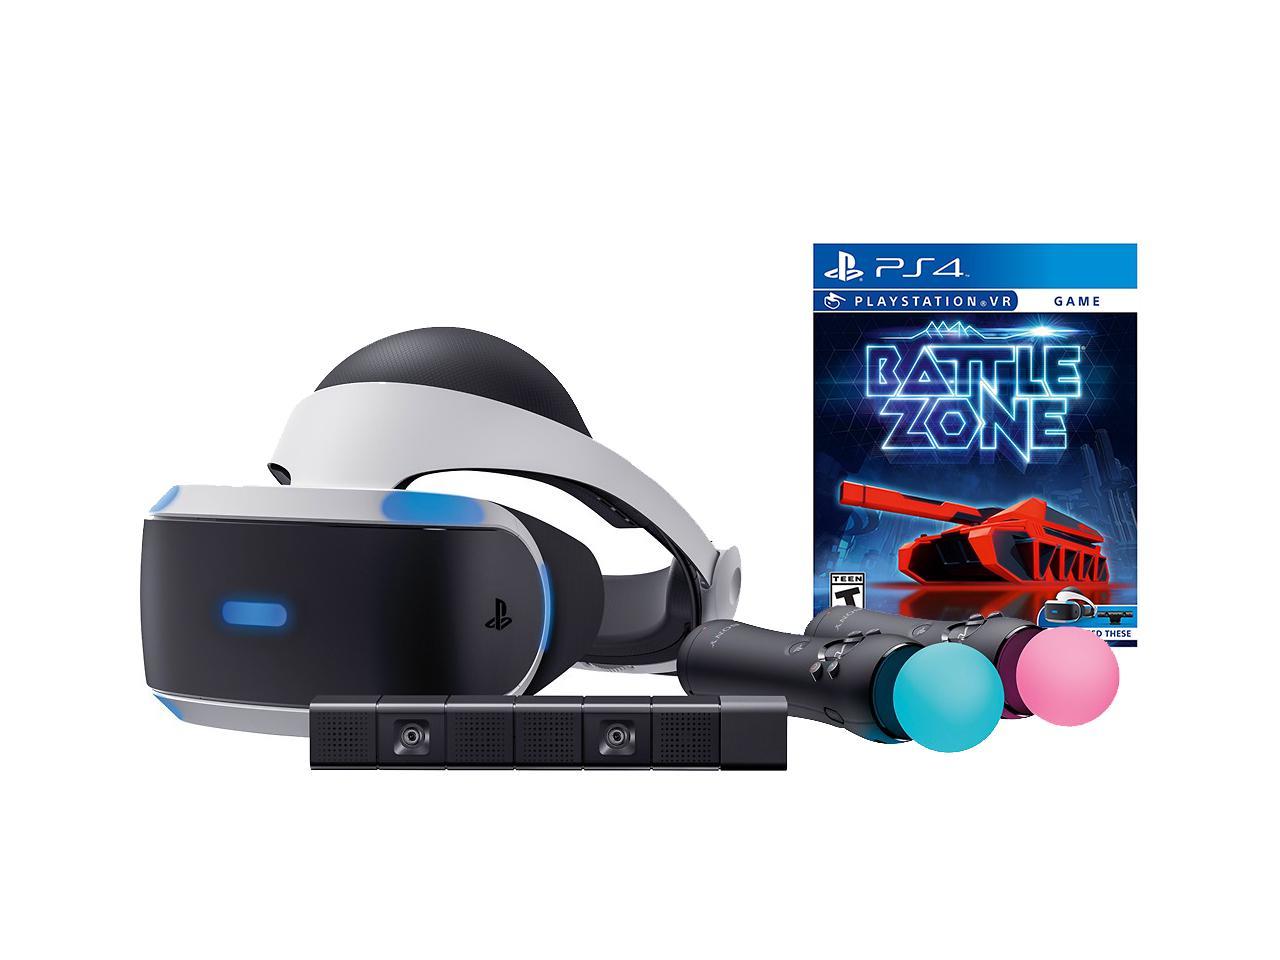 PlayStation VR Battlezone Starter Bundle (4 items): VR Headset, 2 Move Motion Controllers, PlayStation Camera, PSVR Battlezone Game Disc